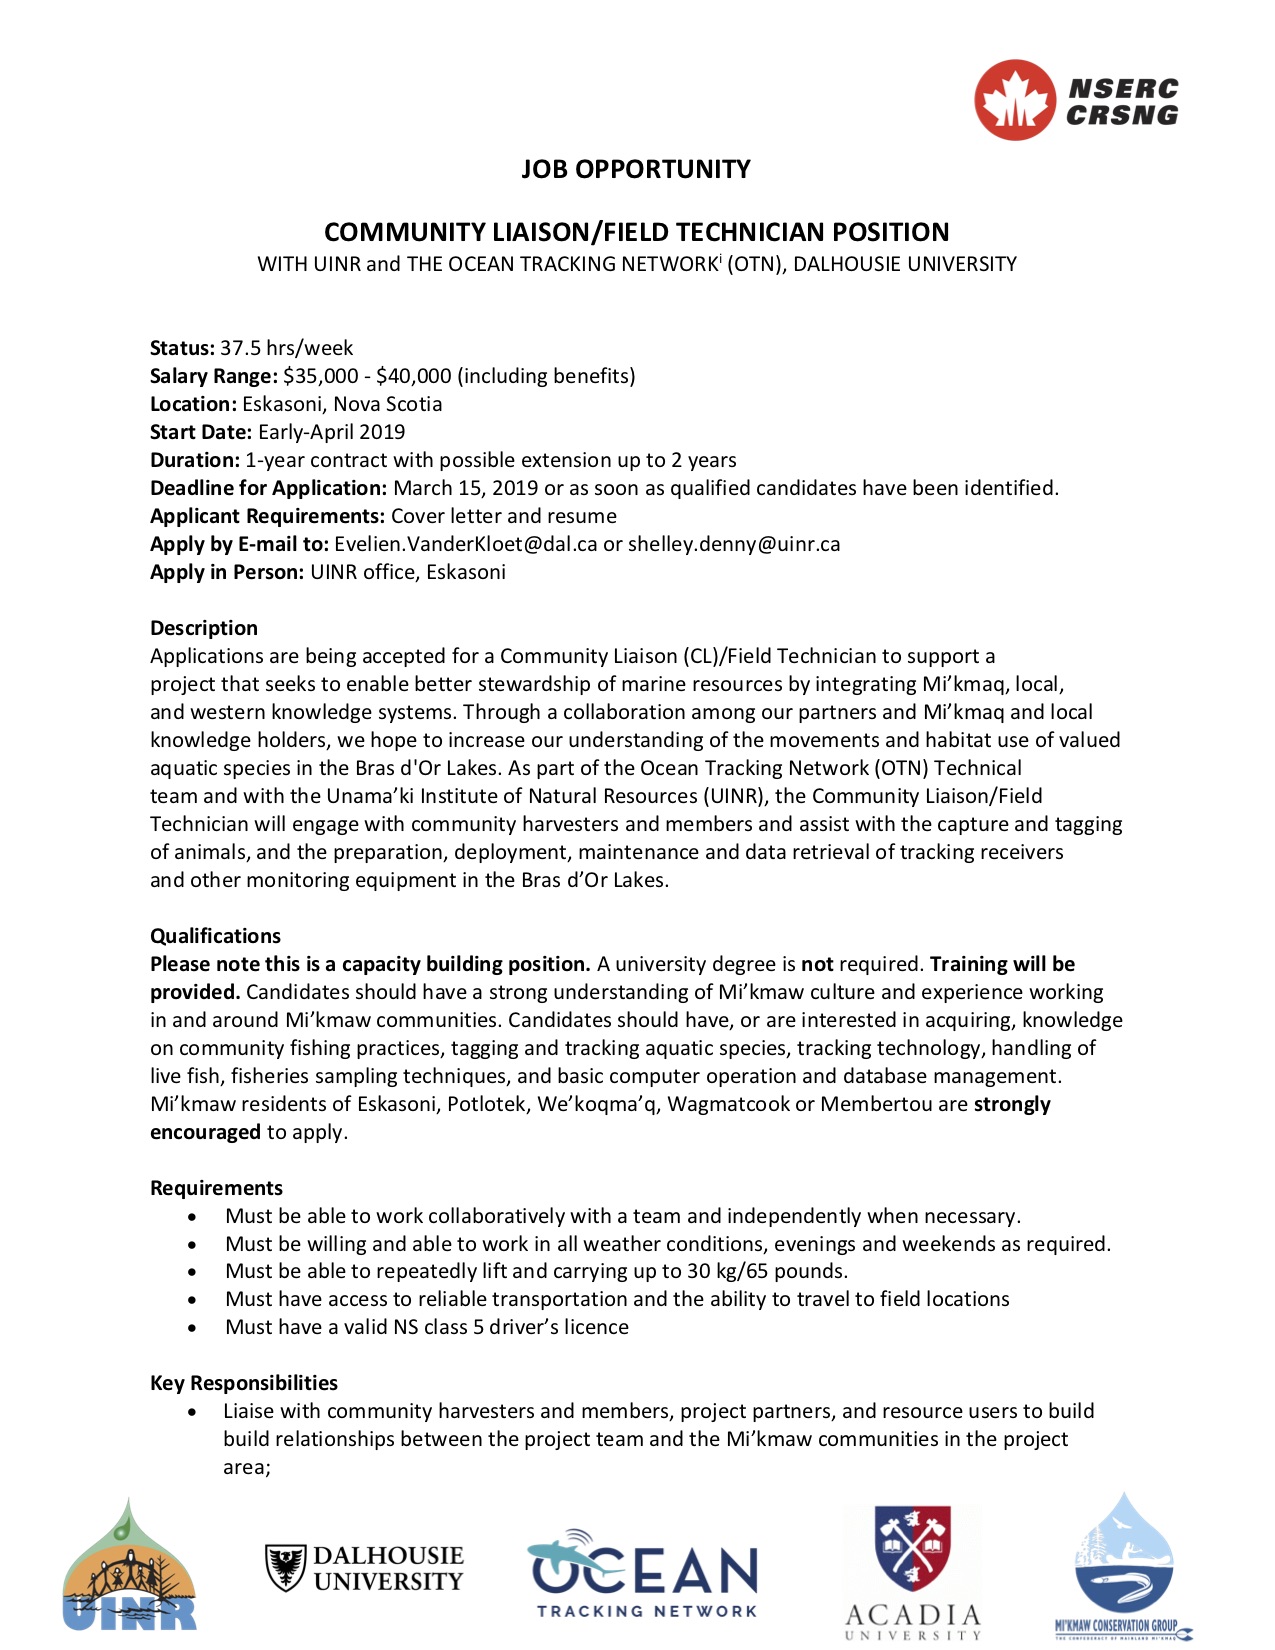 Job Opportunity: Community Liaison / Field Technician